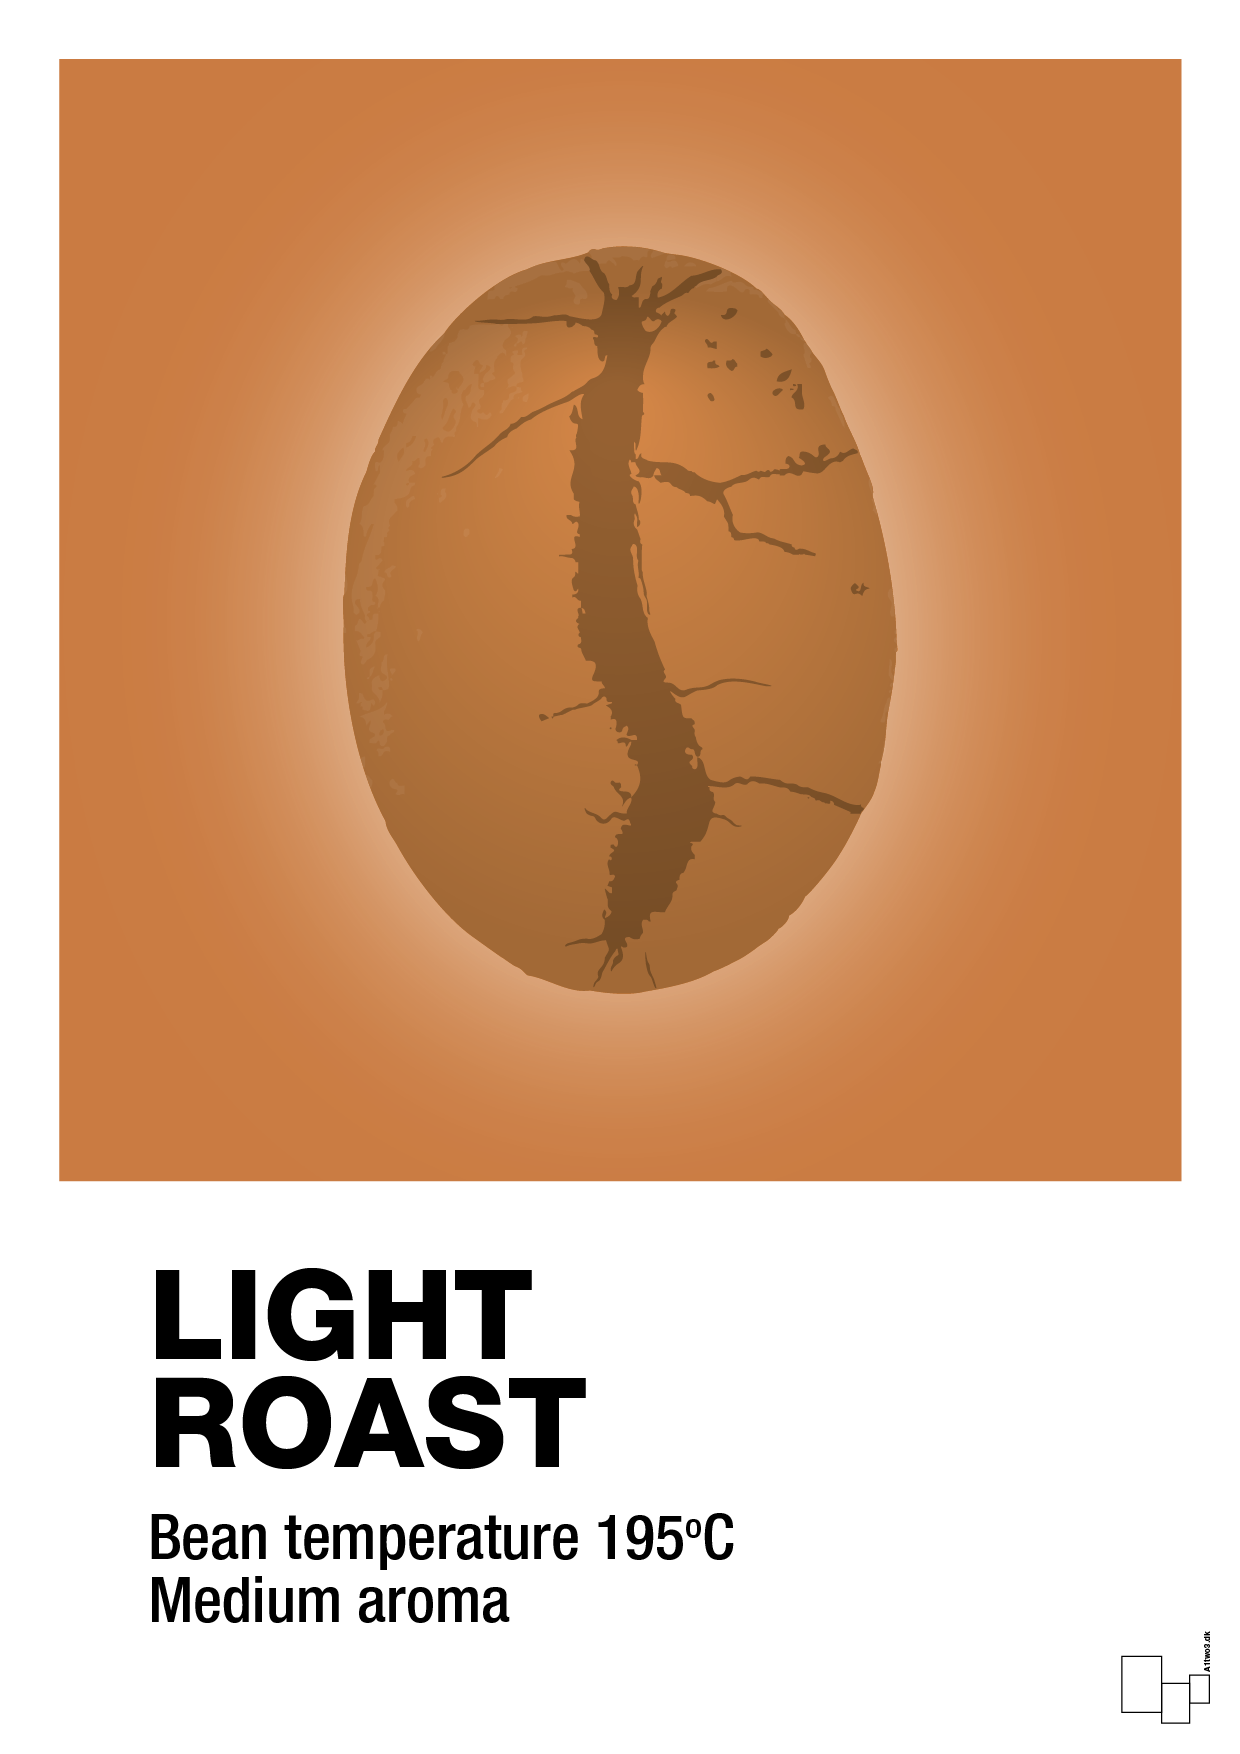 light roast - Plakat med Mad & Drikke i Rumba Orange